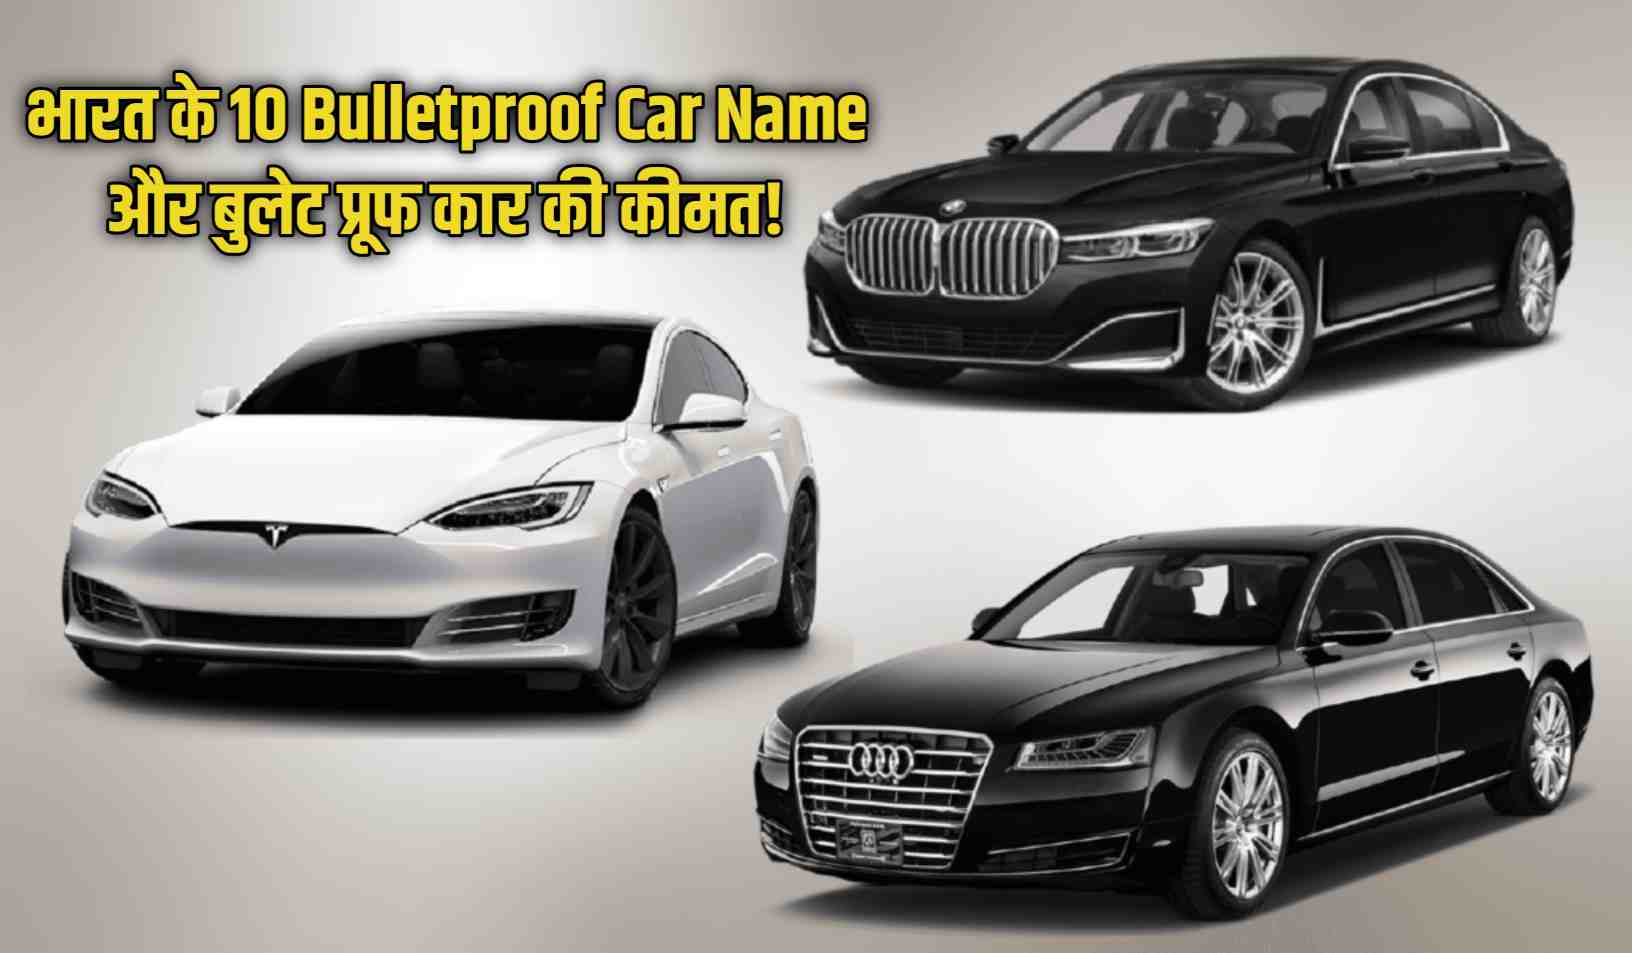 Top 10 Bullet Proof Cars in india Price: यहाँ जाने भारत के 10 Bulletproof Car Name और बुलेट प्रूफ कार की कीमत!